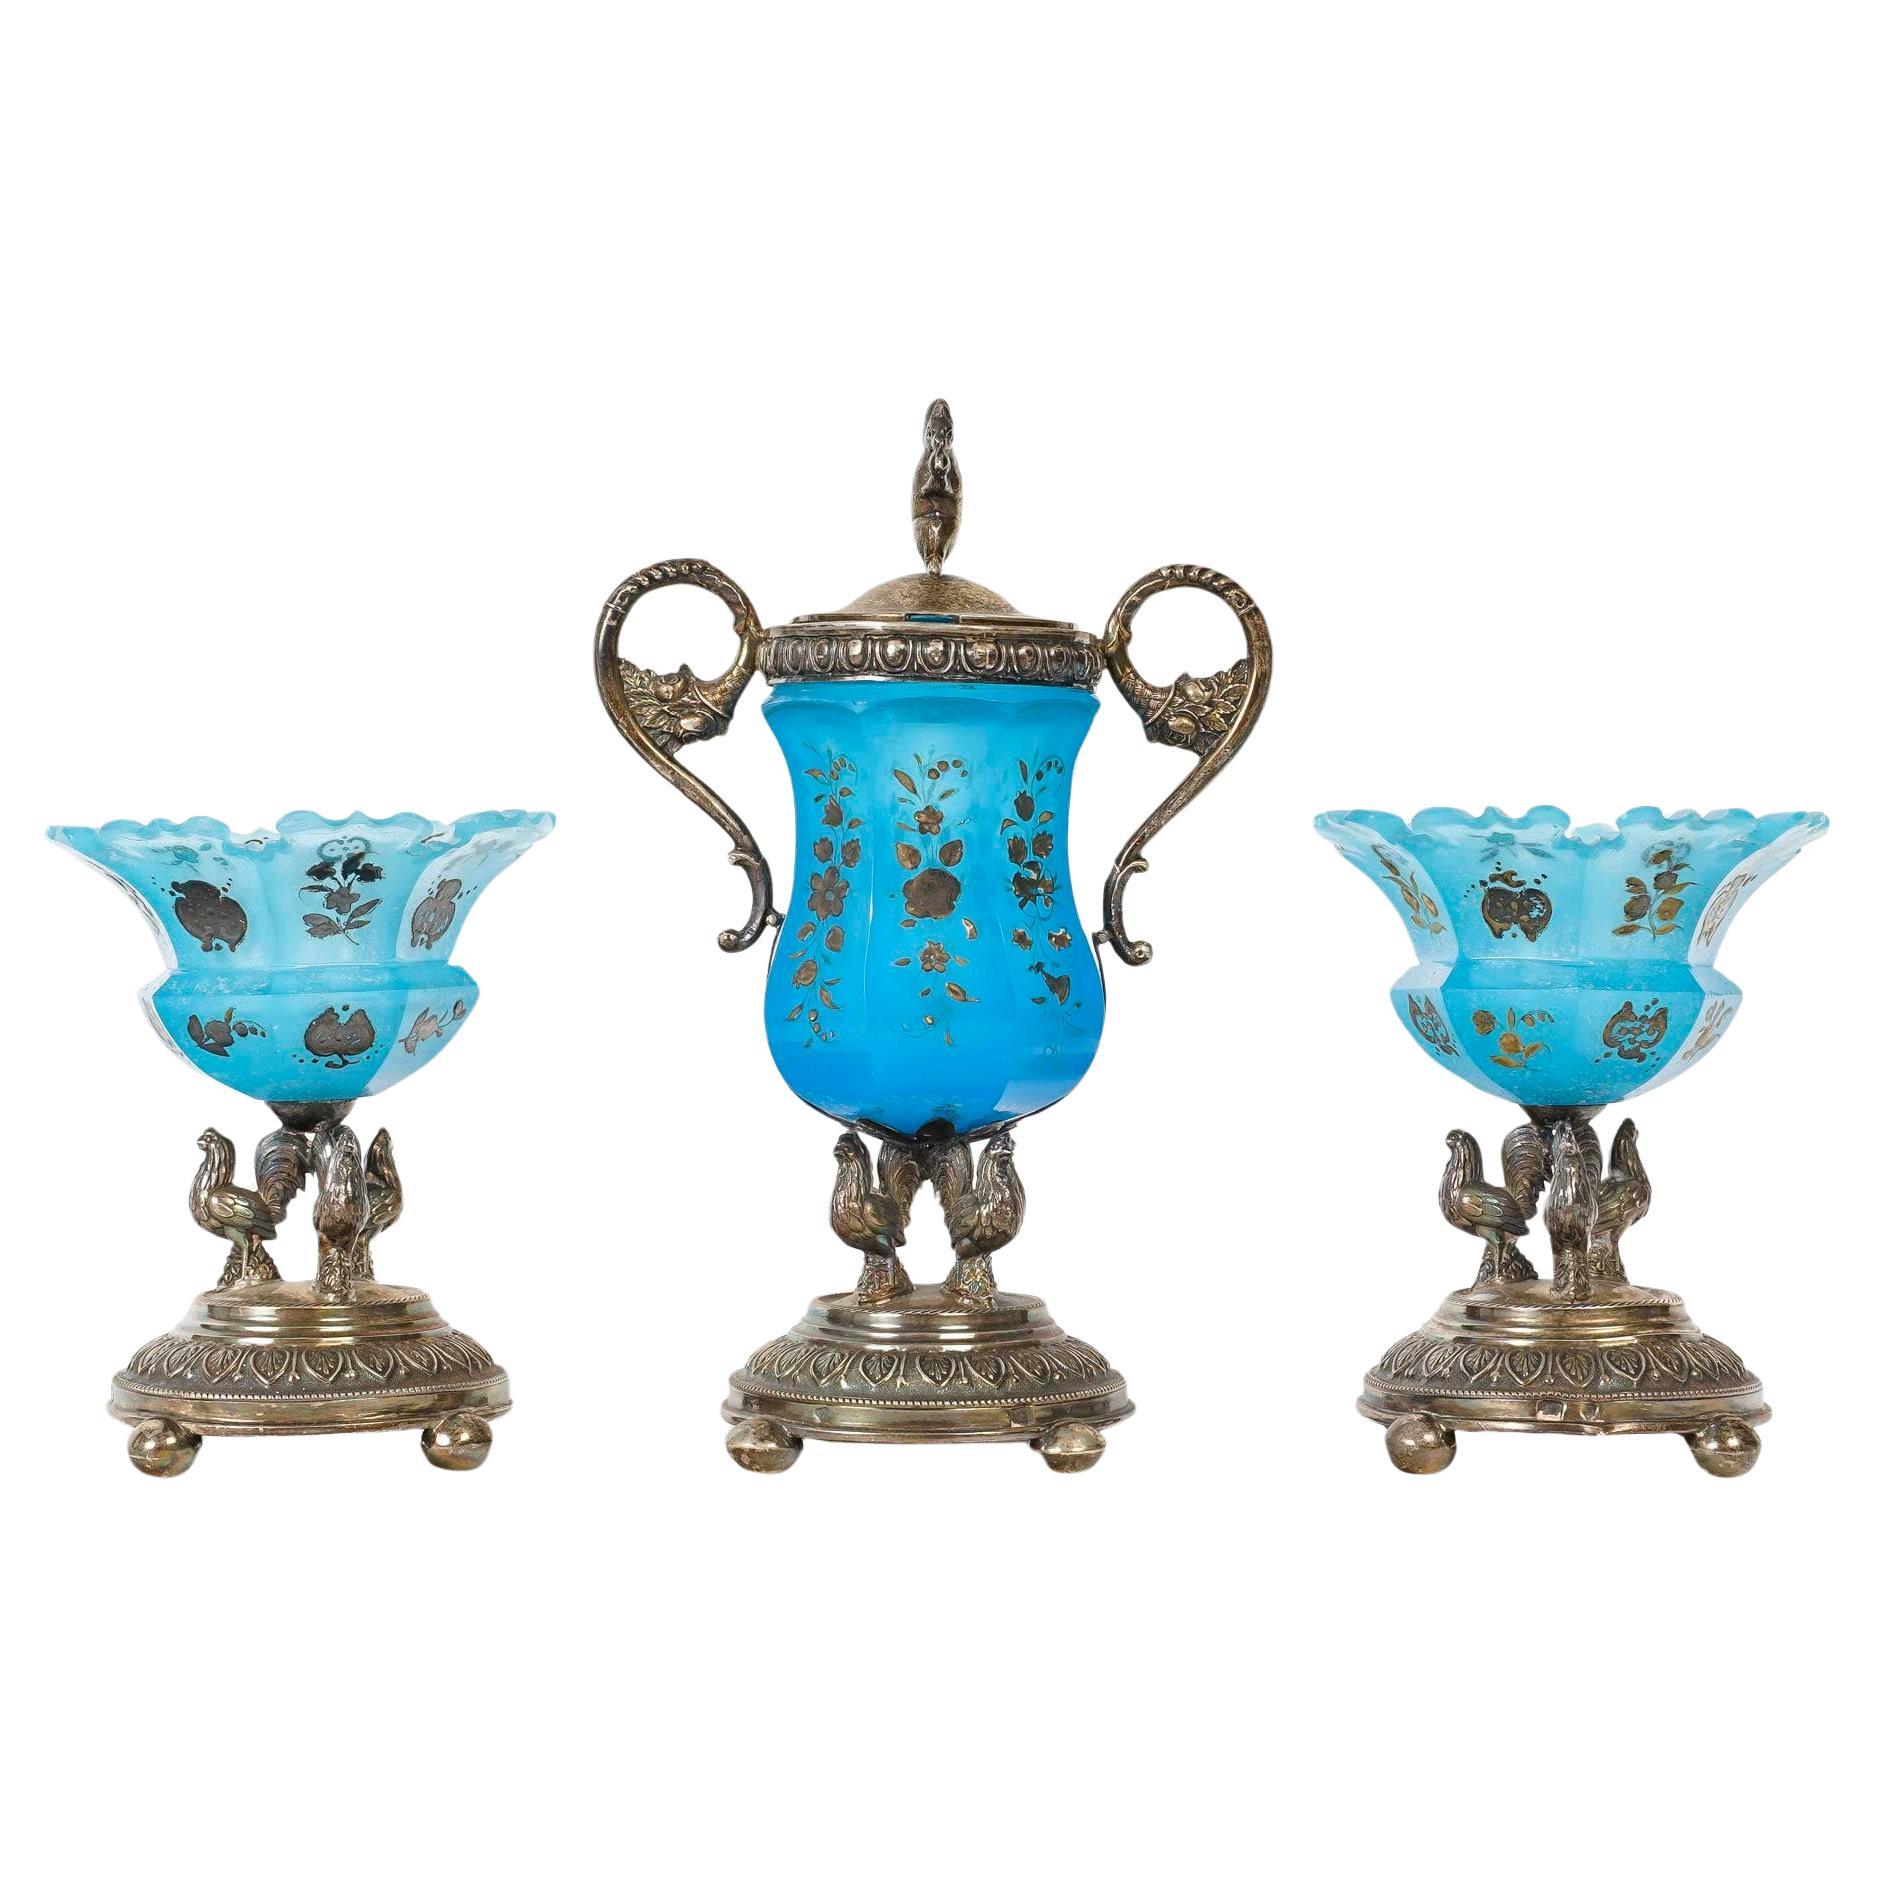 Jam-Set aus blau emailliertem Opal und versilbertem Metall, 19. Jahrhundert.